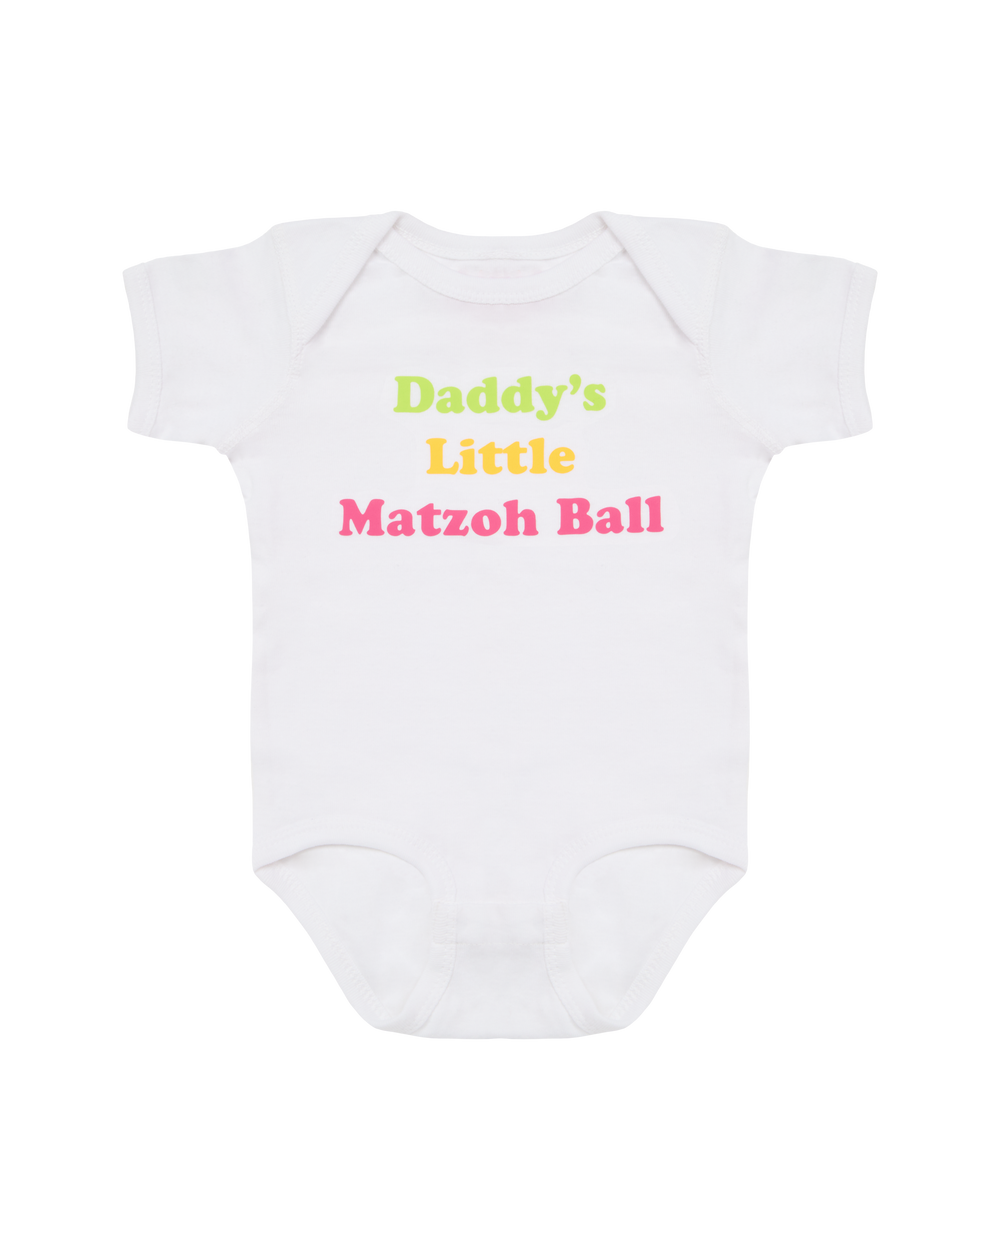 Daddy's Little Matzoh Ball Tee - Baby